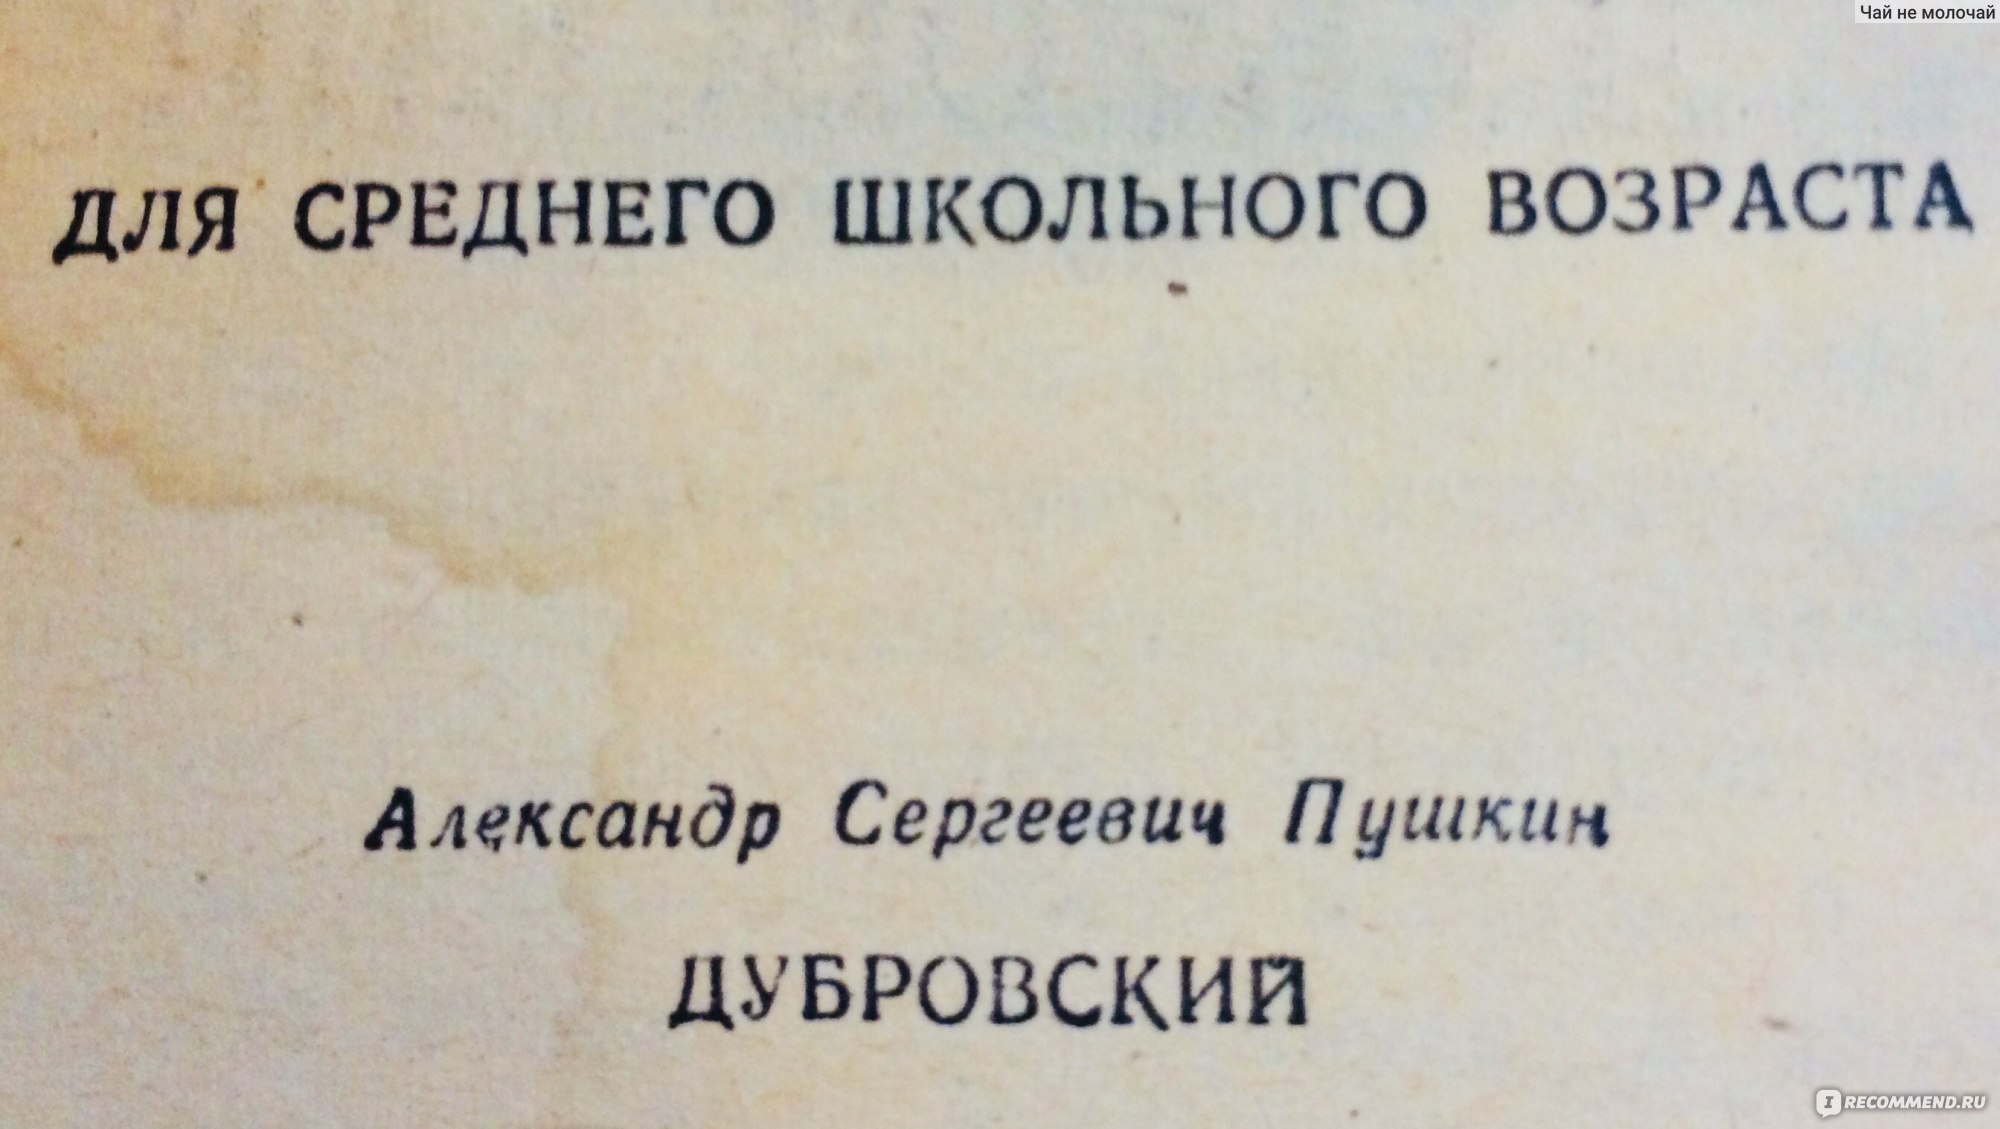 Пушкин Дубровский 1946 год